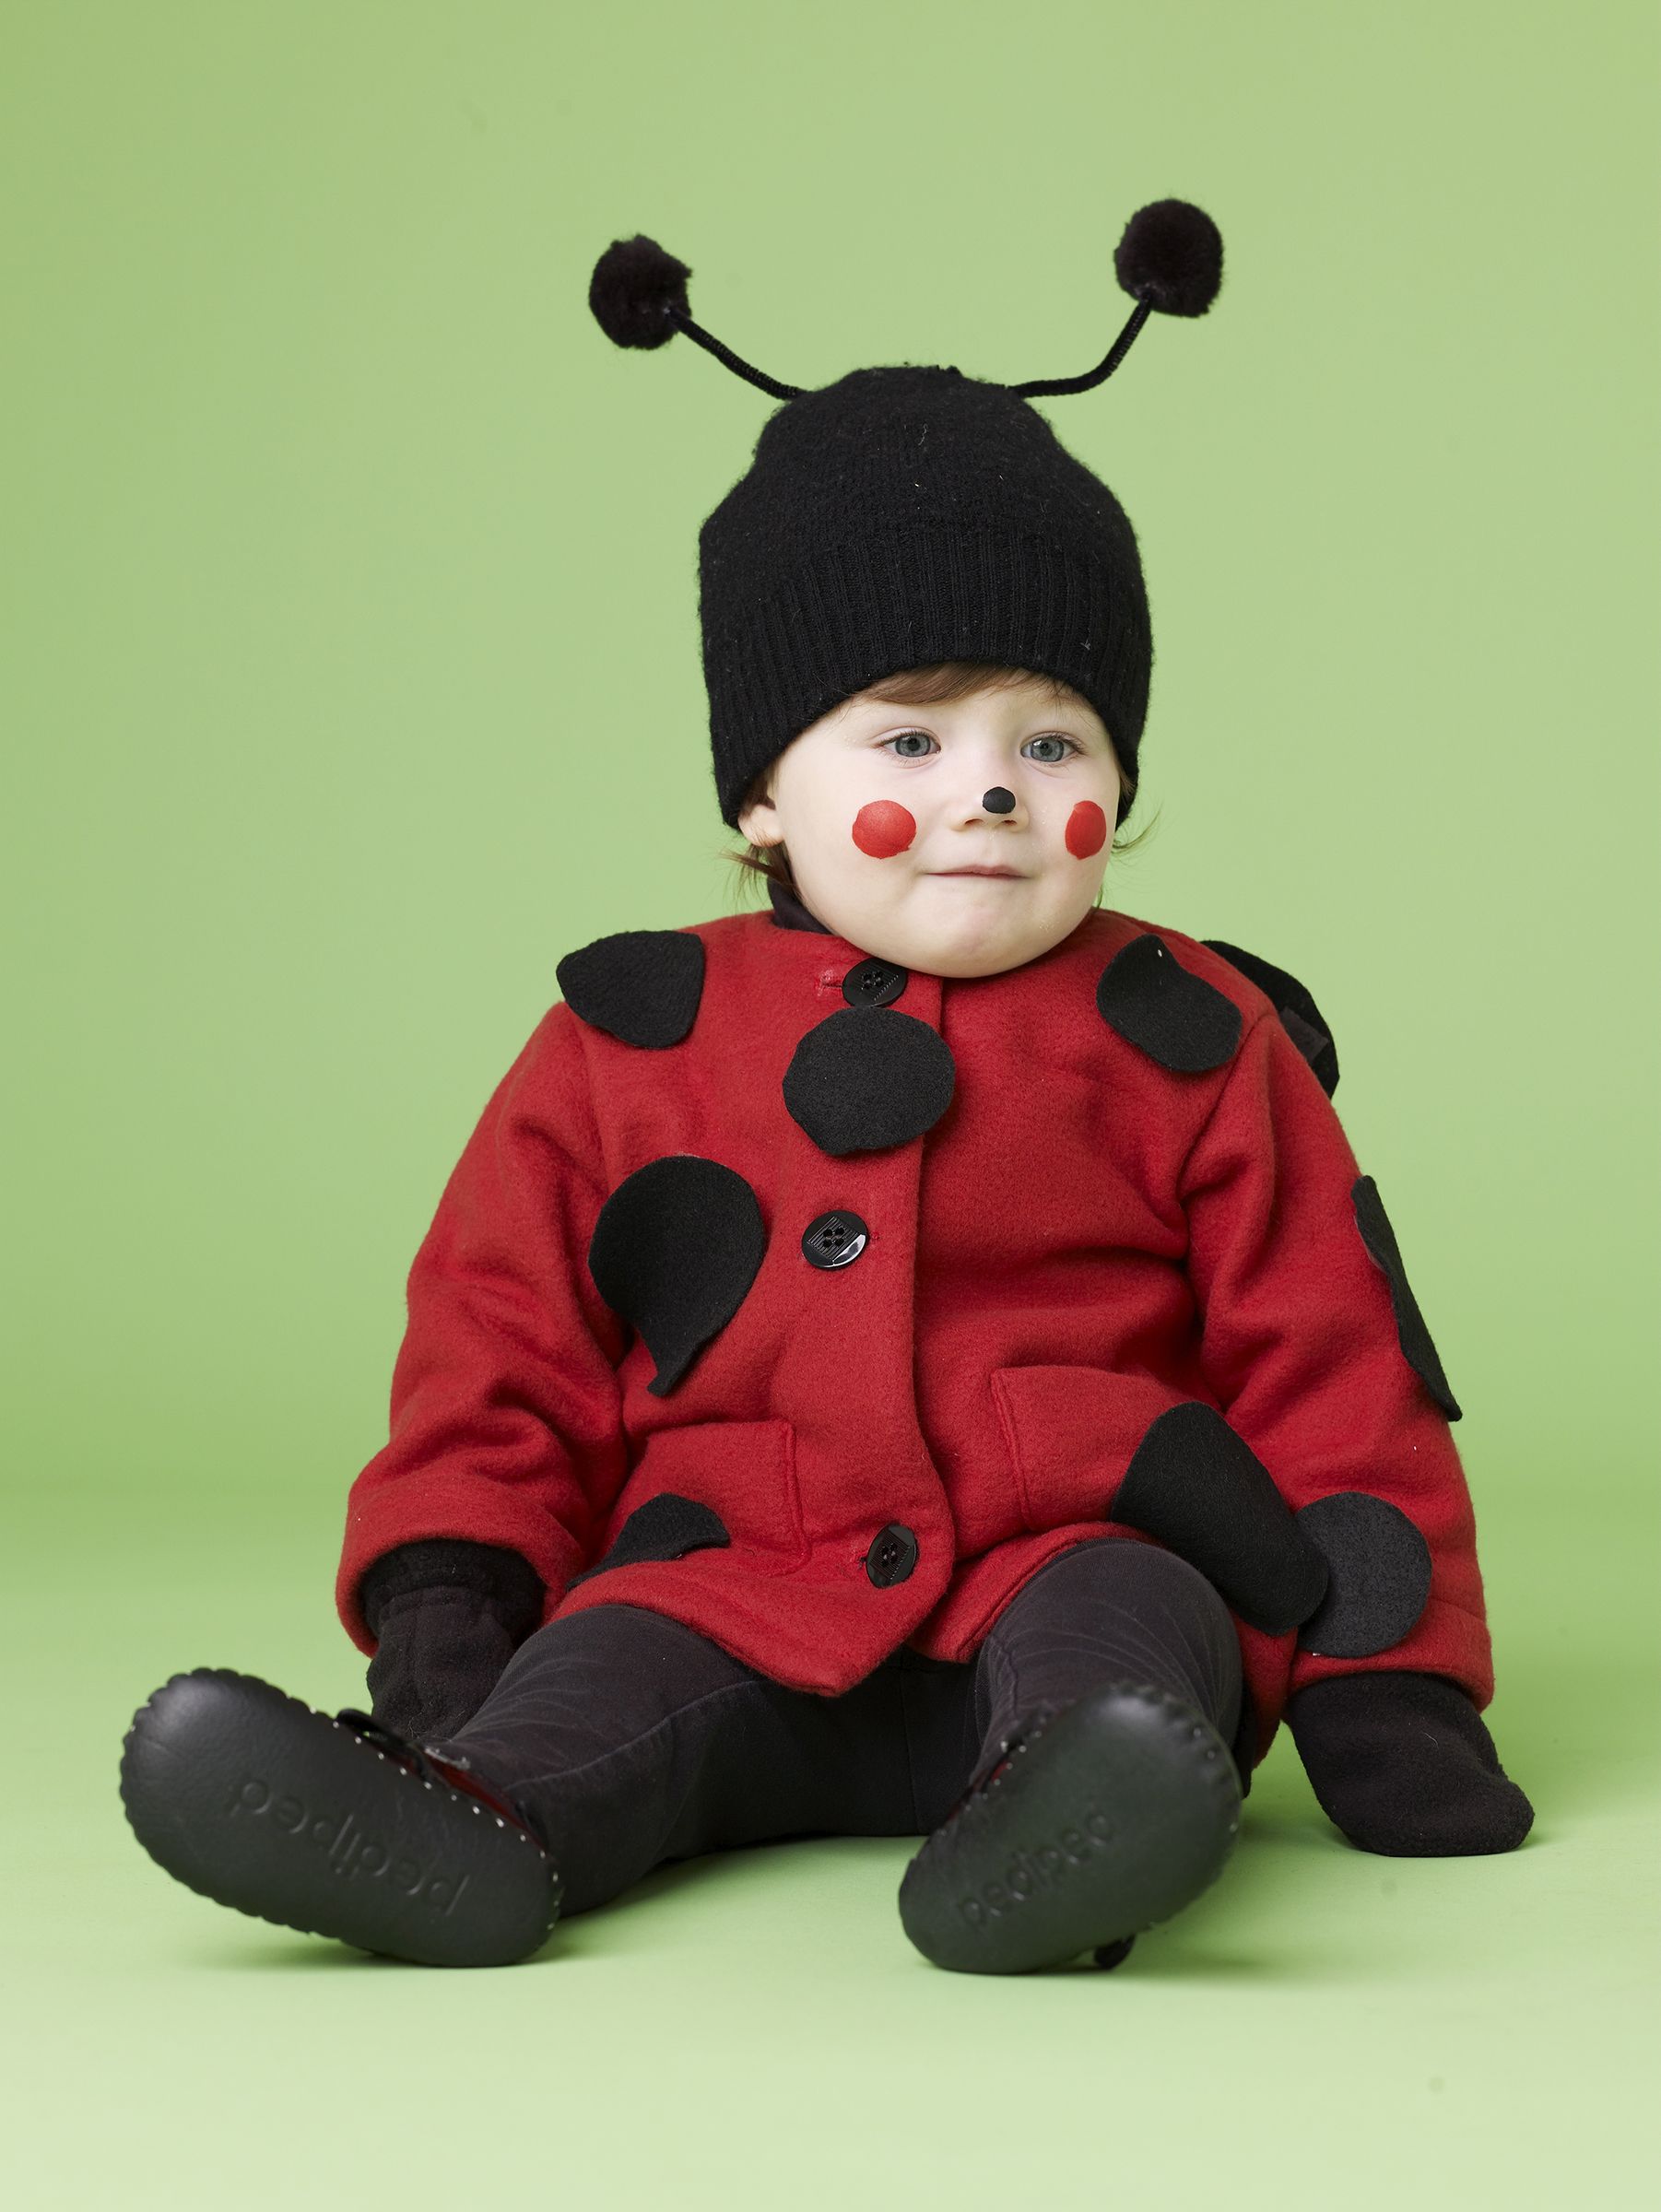 Child's Ladybug Costume